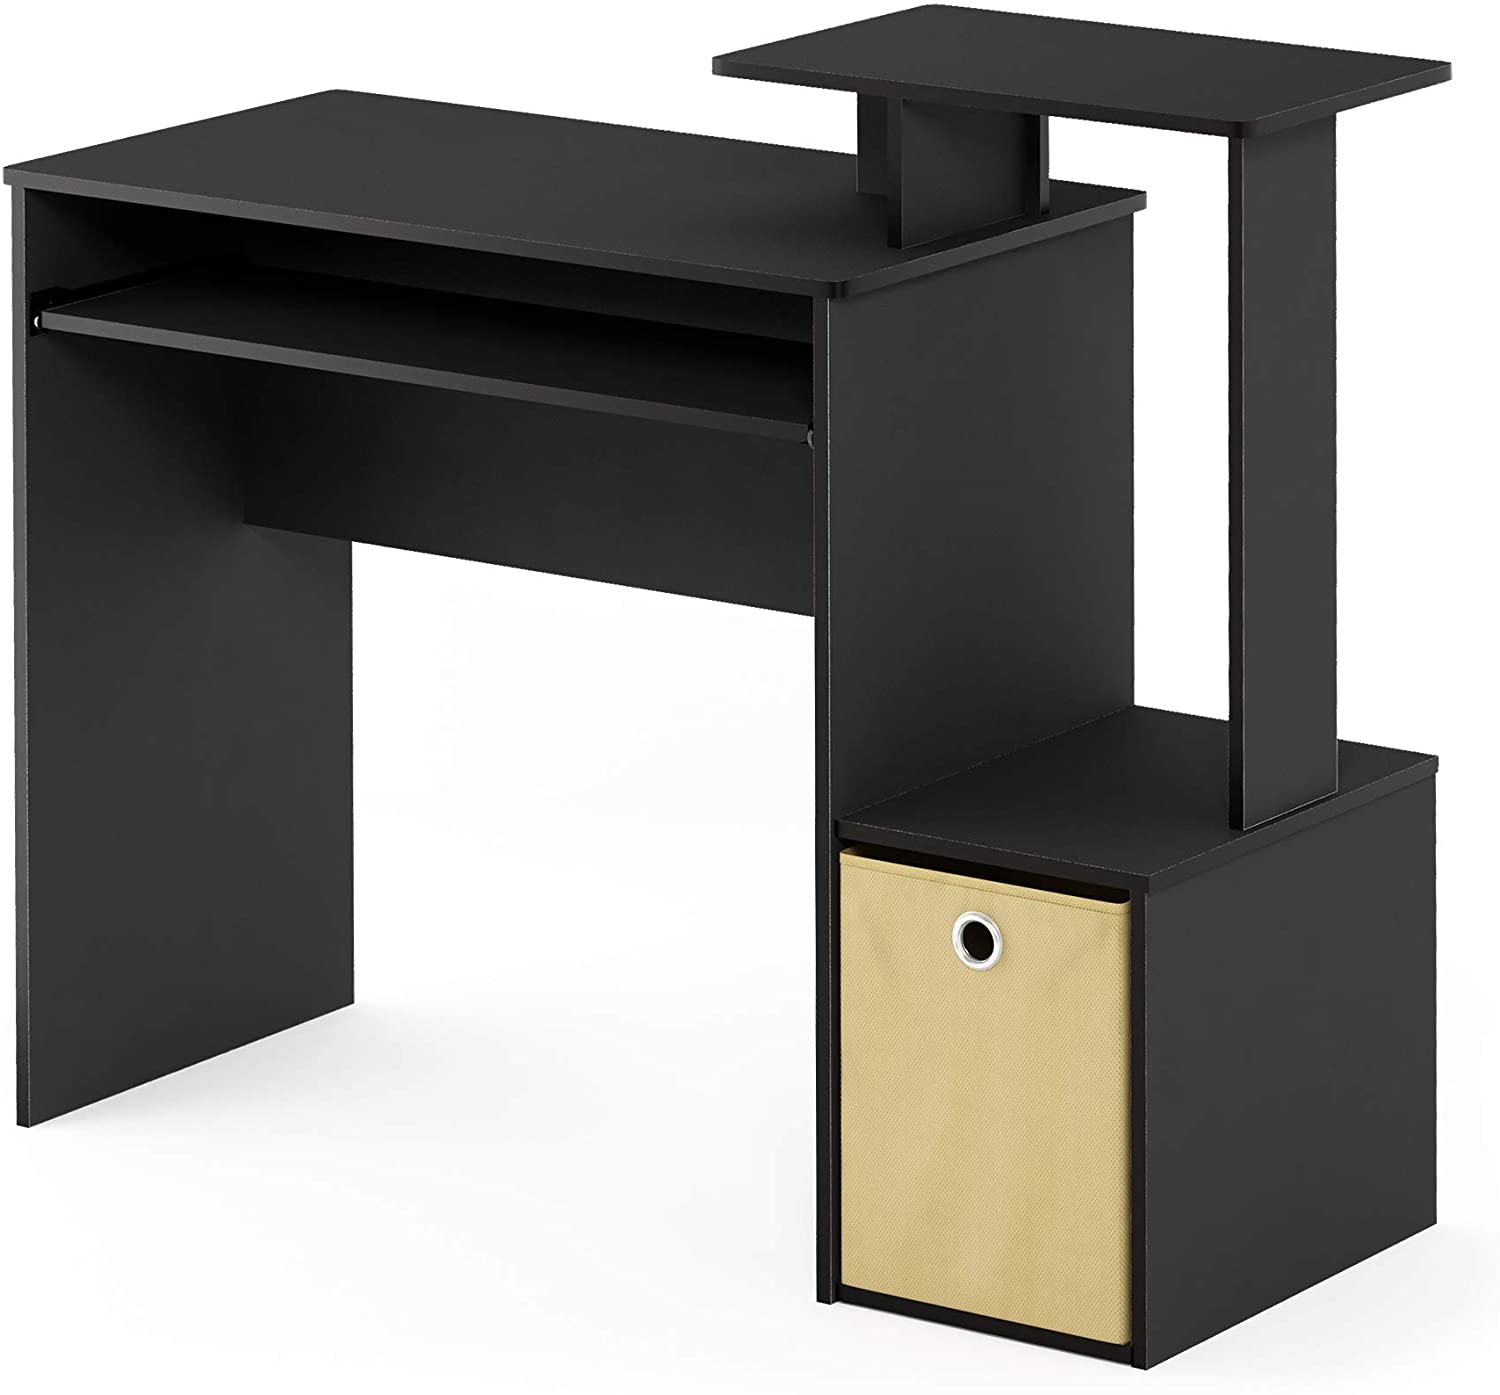 Furinno Econ Multipurpose Home Office Computer Writing Desk, Black/Brown